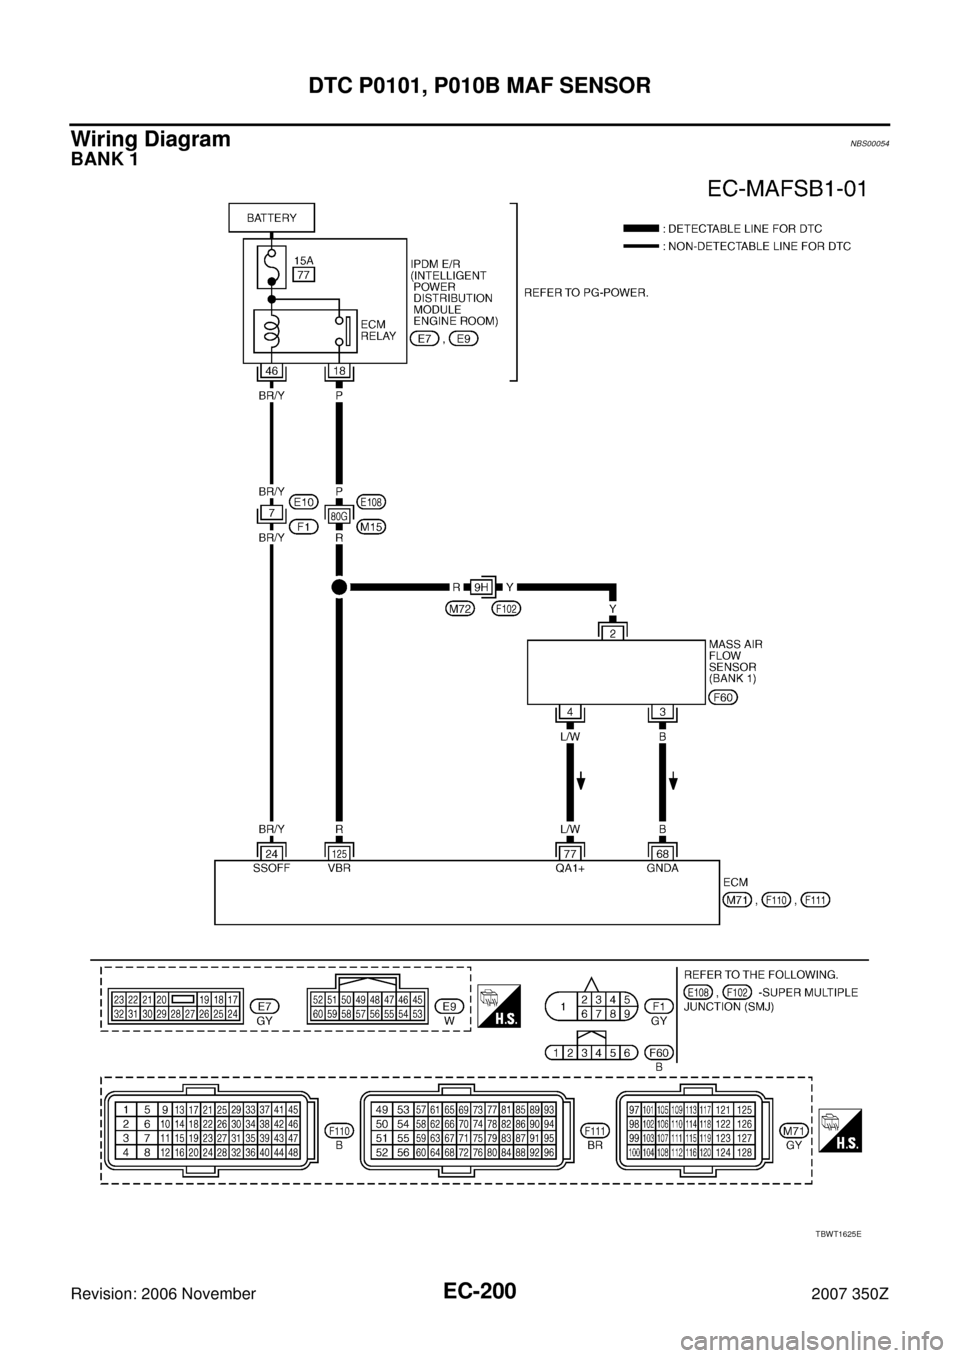 NISSAN 350Z 2007 Z33 Engine Control Workshop Manual EC-200
DTC P0101, P010B MAF SENSOR
Revision: 2006 November2007 350Z
Wiring DiagramNBS00054
BANK 1
TBWT1625E 